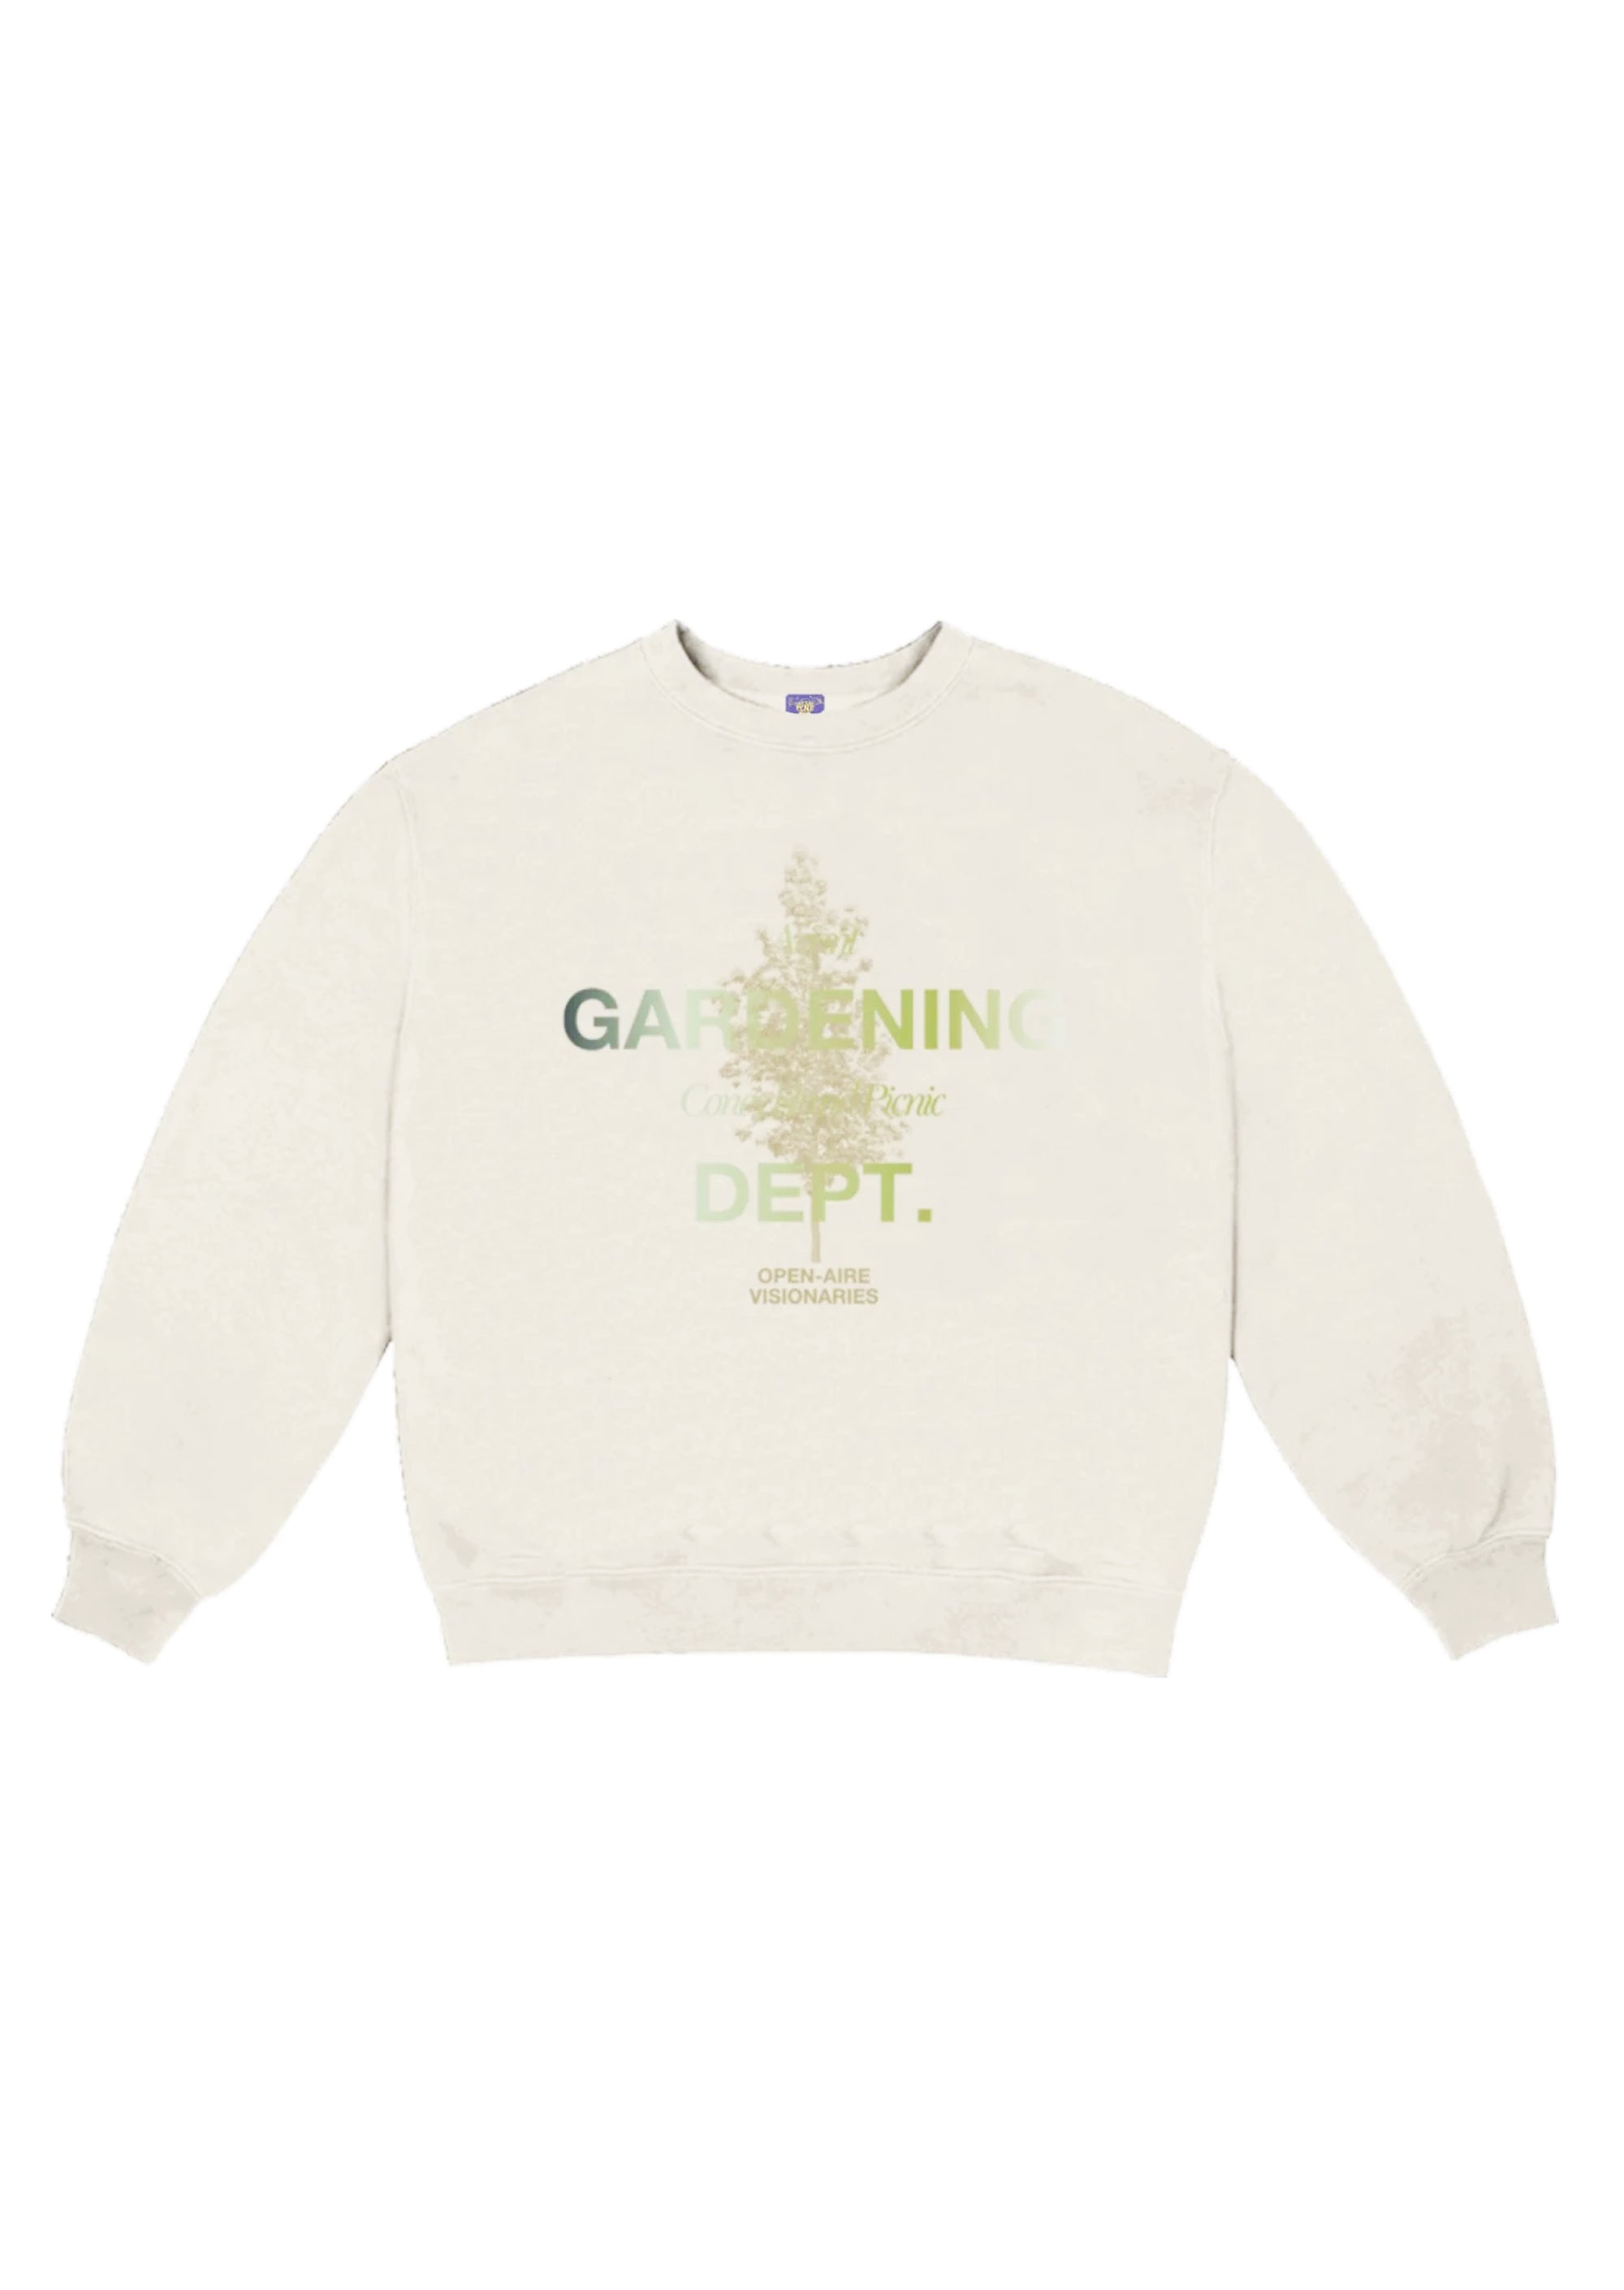 Avant Gardening Graphic Sweatshirt